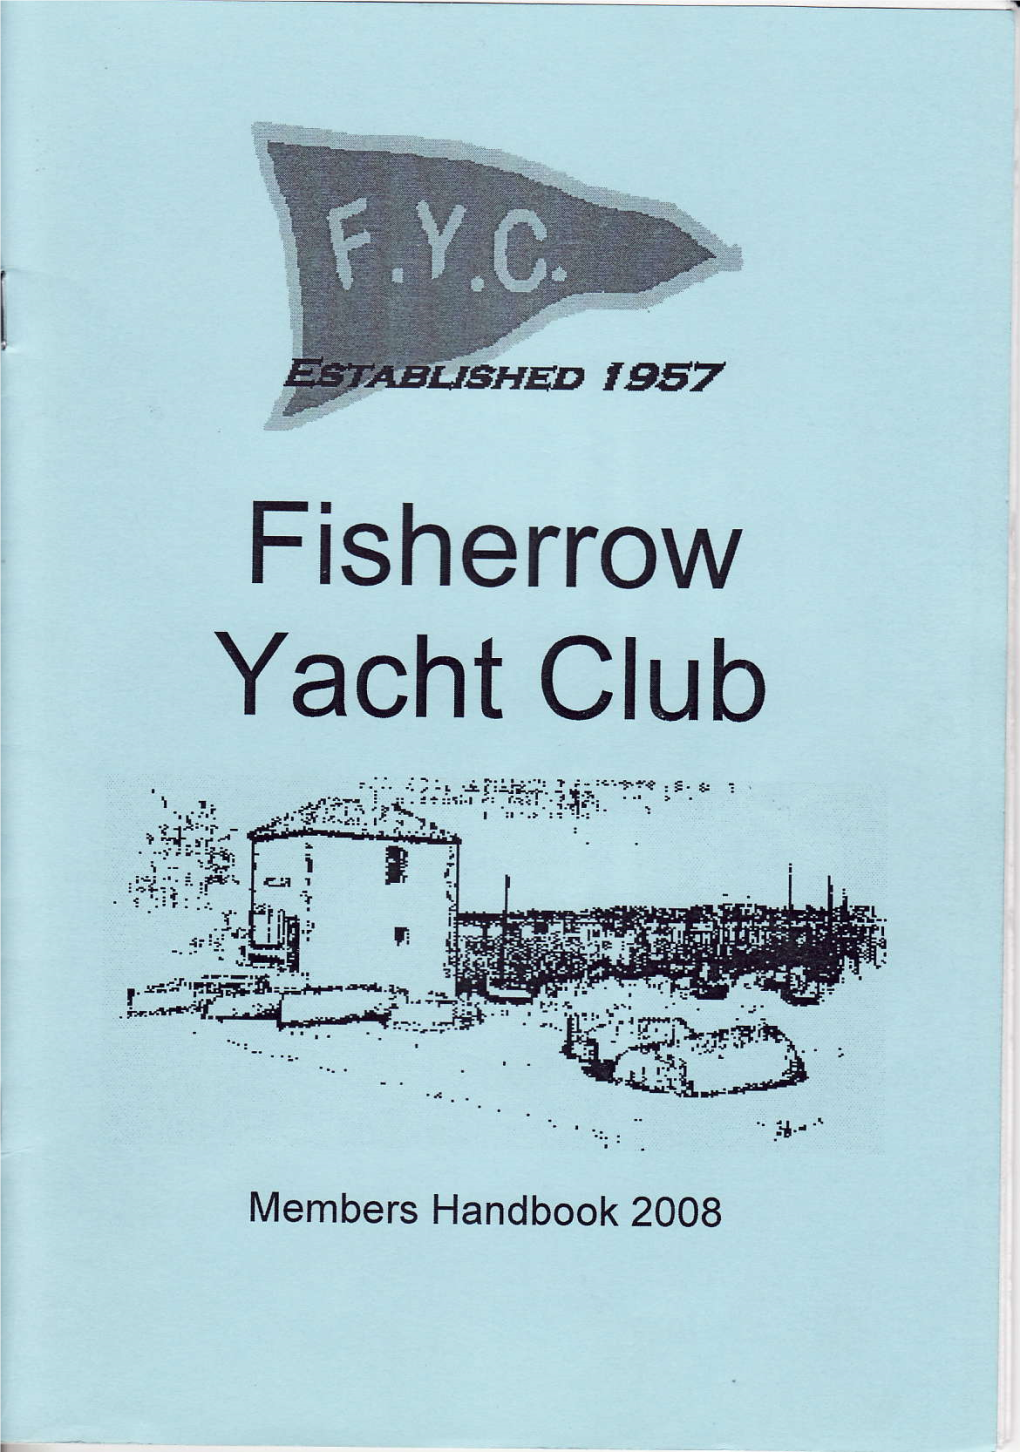 Fisherrow Yacht Club R$Mrnow 0131665 5900 HA.RBOI]RM Sitf,R 3 Stoneyhillgrove Musselburgh EH216SE L..--- IIANDEOOK 2OOE 0Ryc-> L ;;1* 0Fyc>' EANDBOOK 2OO8